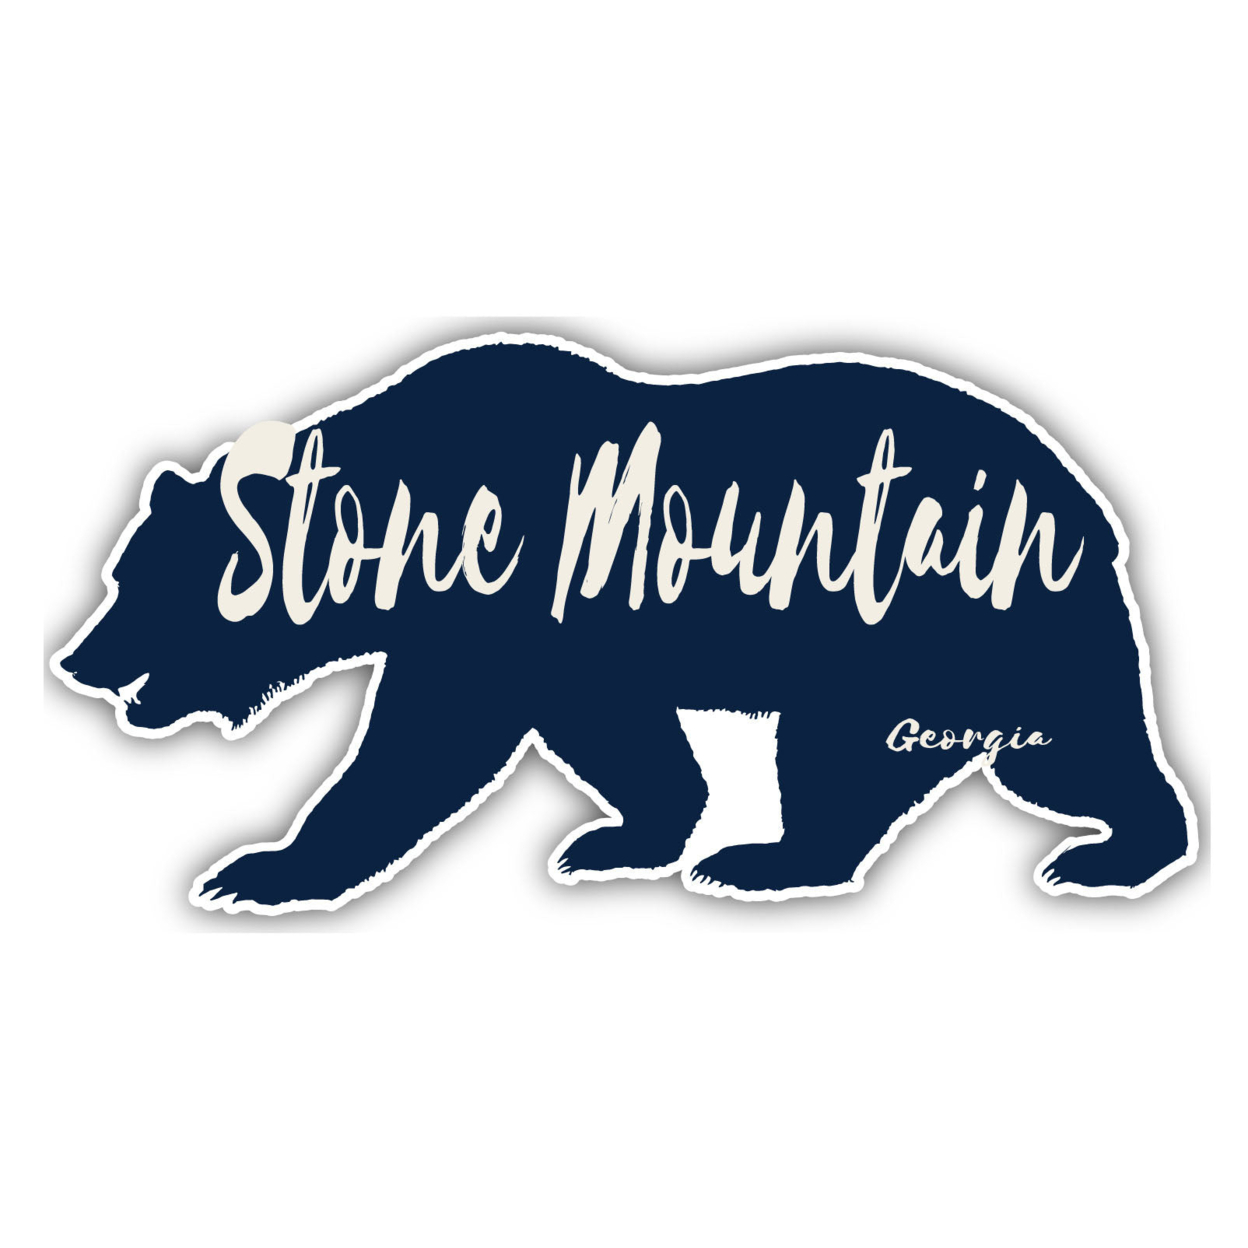 Stone Mountain Georgia Souvenir Decorative Stickers (Choose Theme And Size) - Single Unit, 2-Inch, Tent